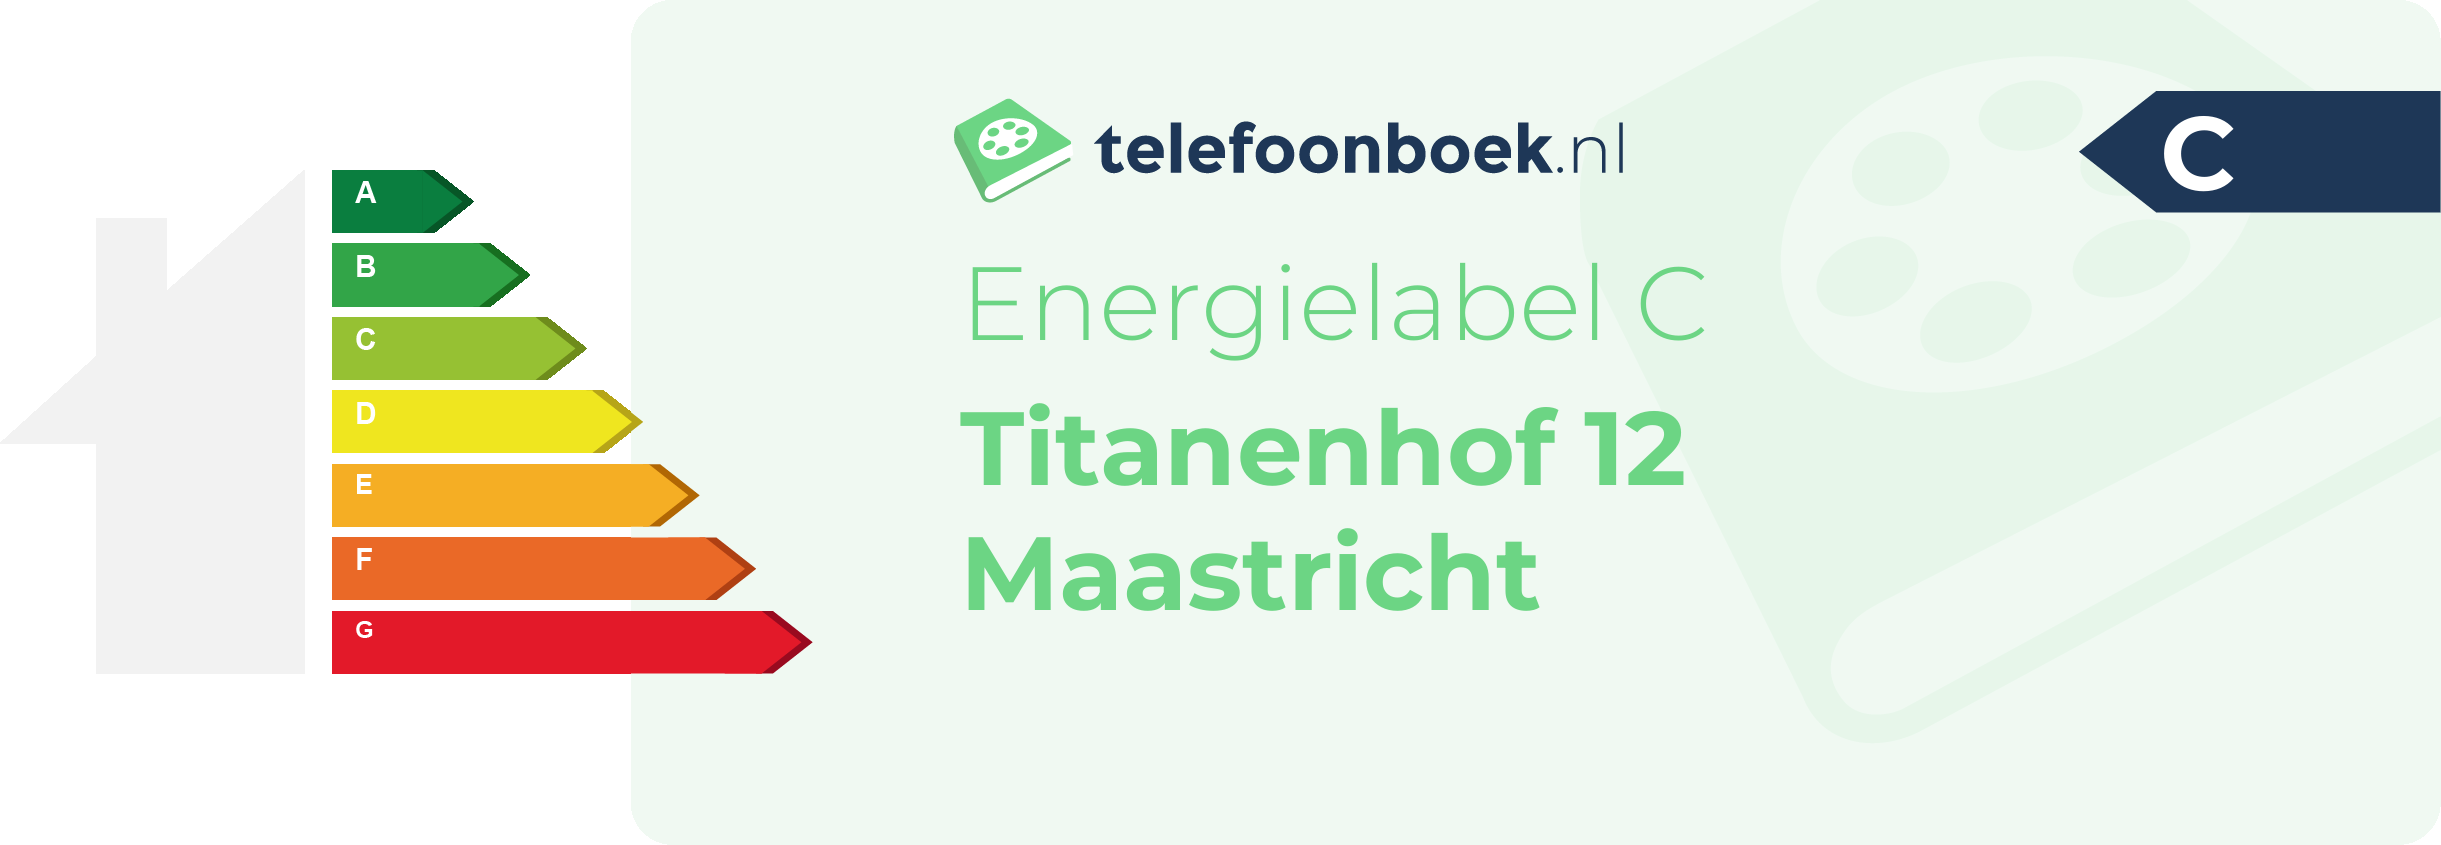 Energielabel Titanenhof 12 Maastricht